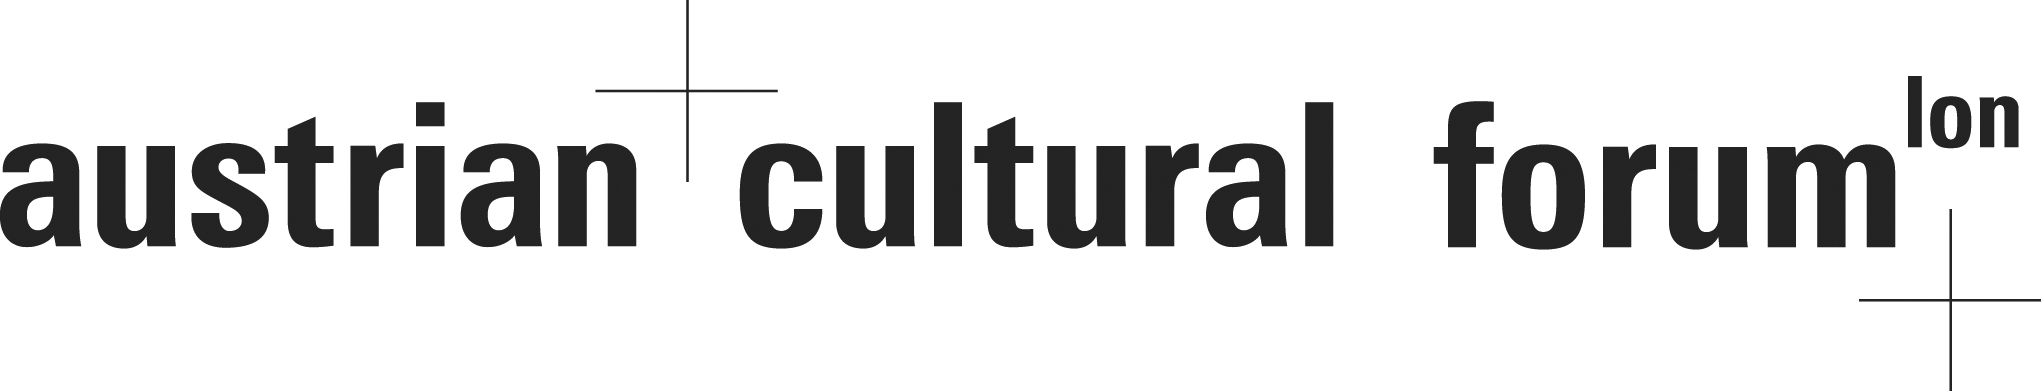 austrian-cultural-forum-logo.jpg